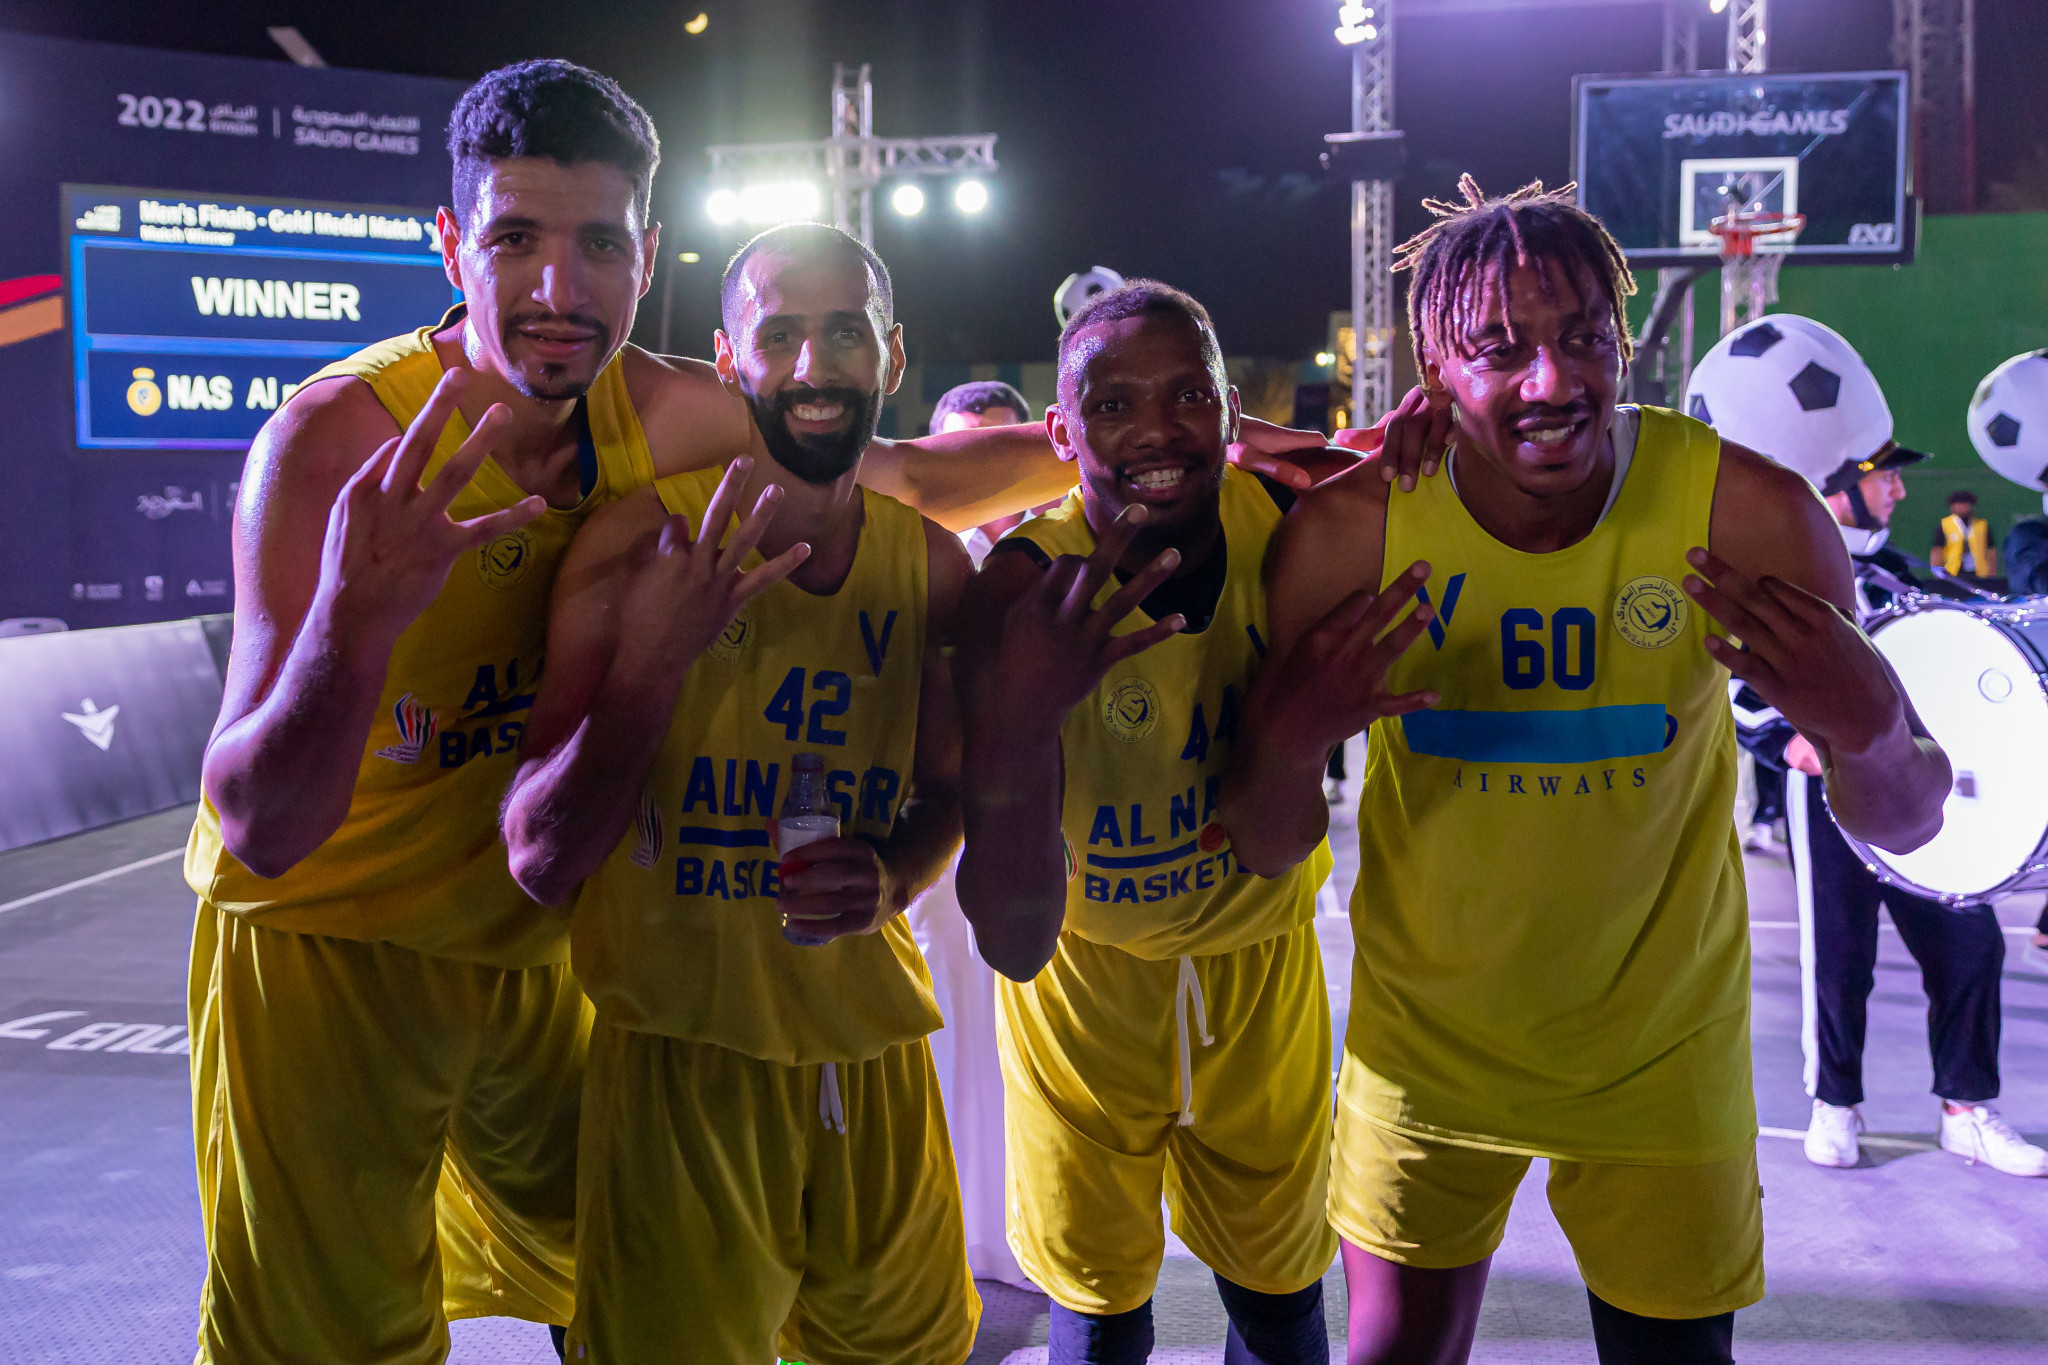 Al-Nassr shoot lights out to secure men's 3x3 basketball gold